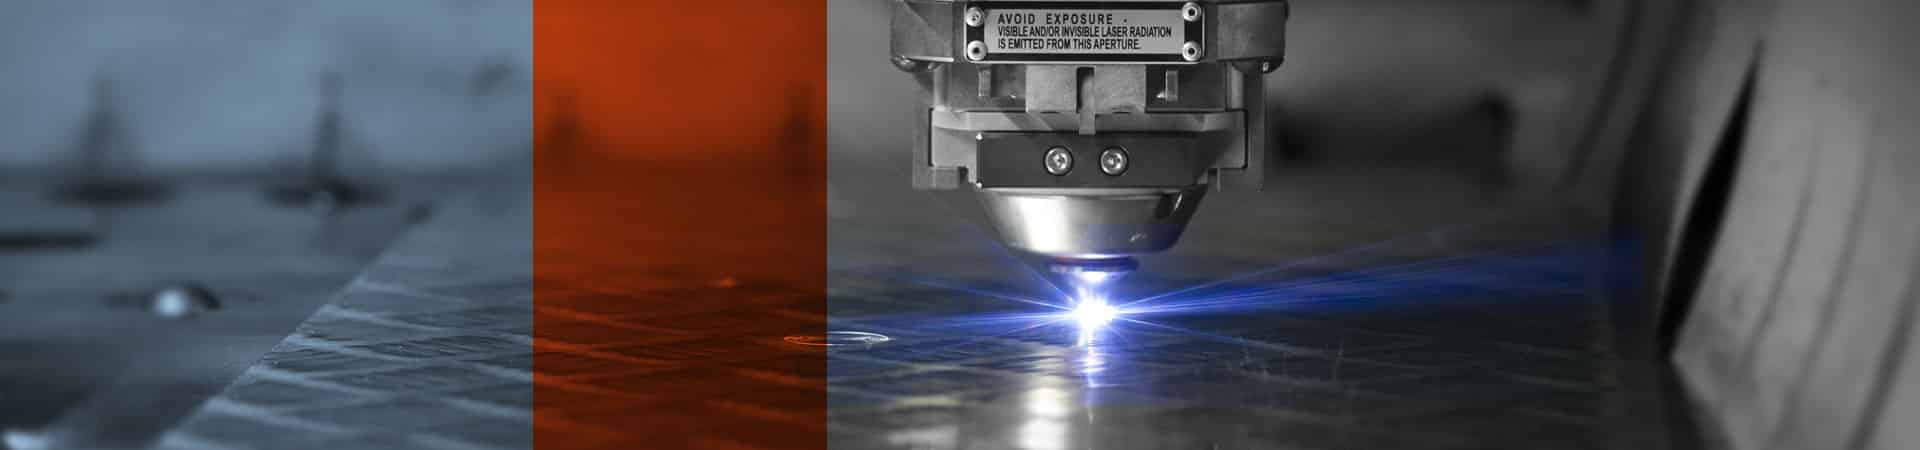 artieres carrosserie atelier decoupe laser